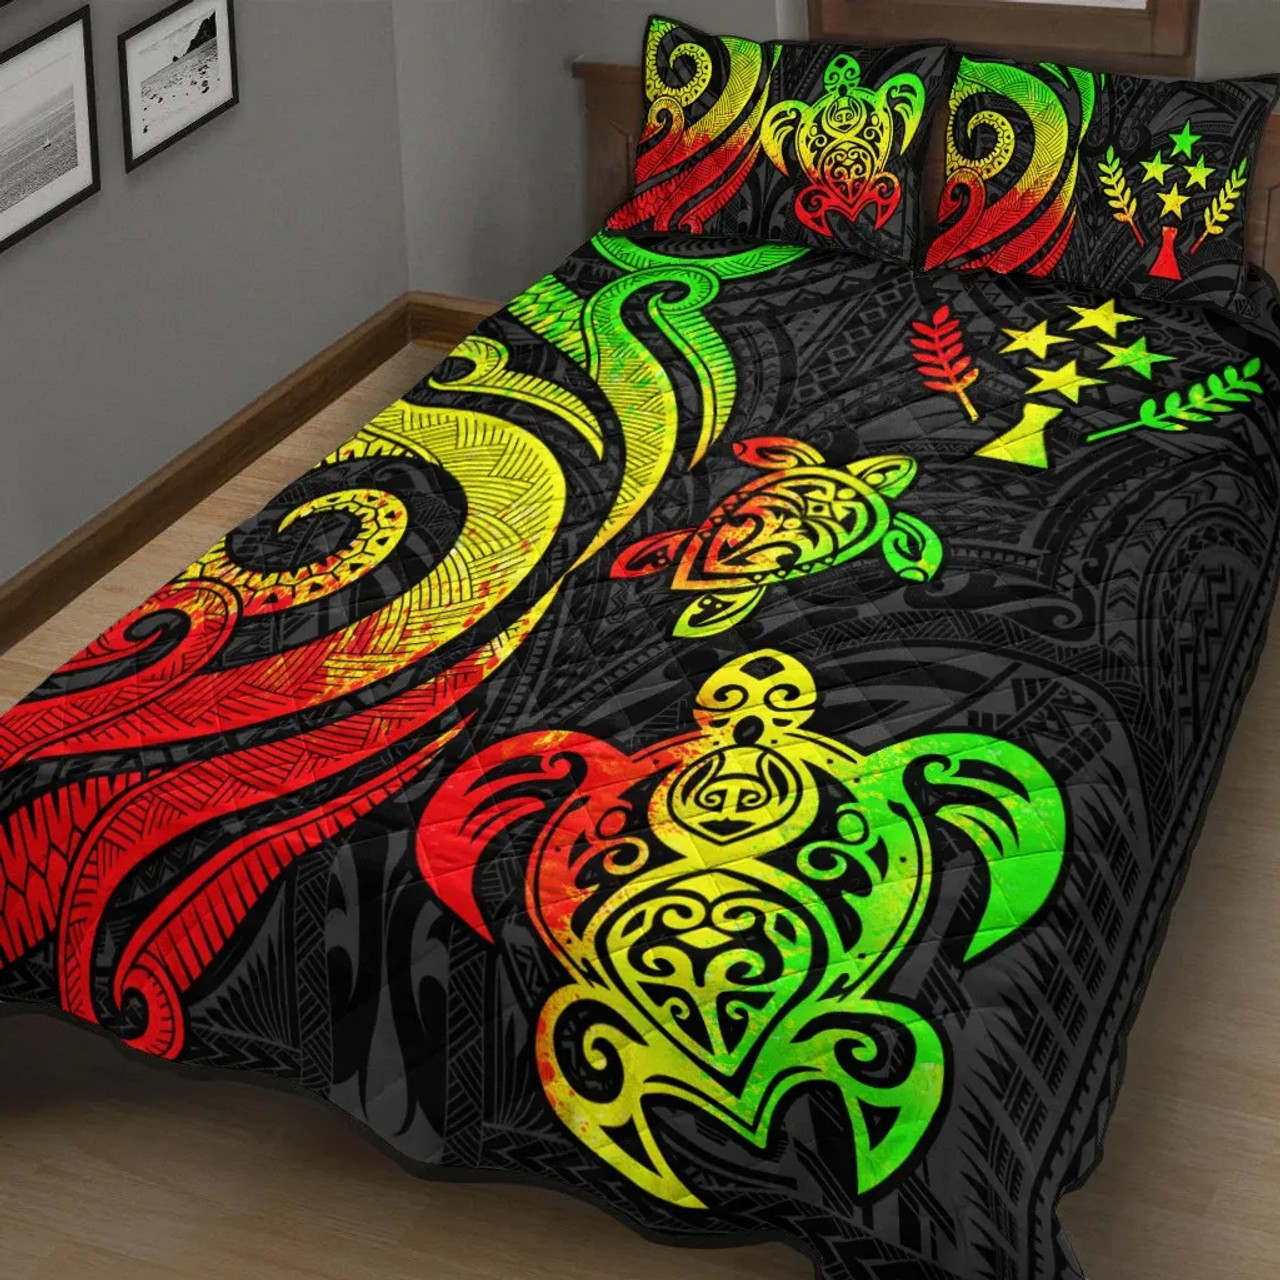 Kosrae Quilt Bed Set - Reggae Tentacle Turtle 2